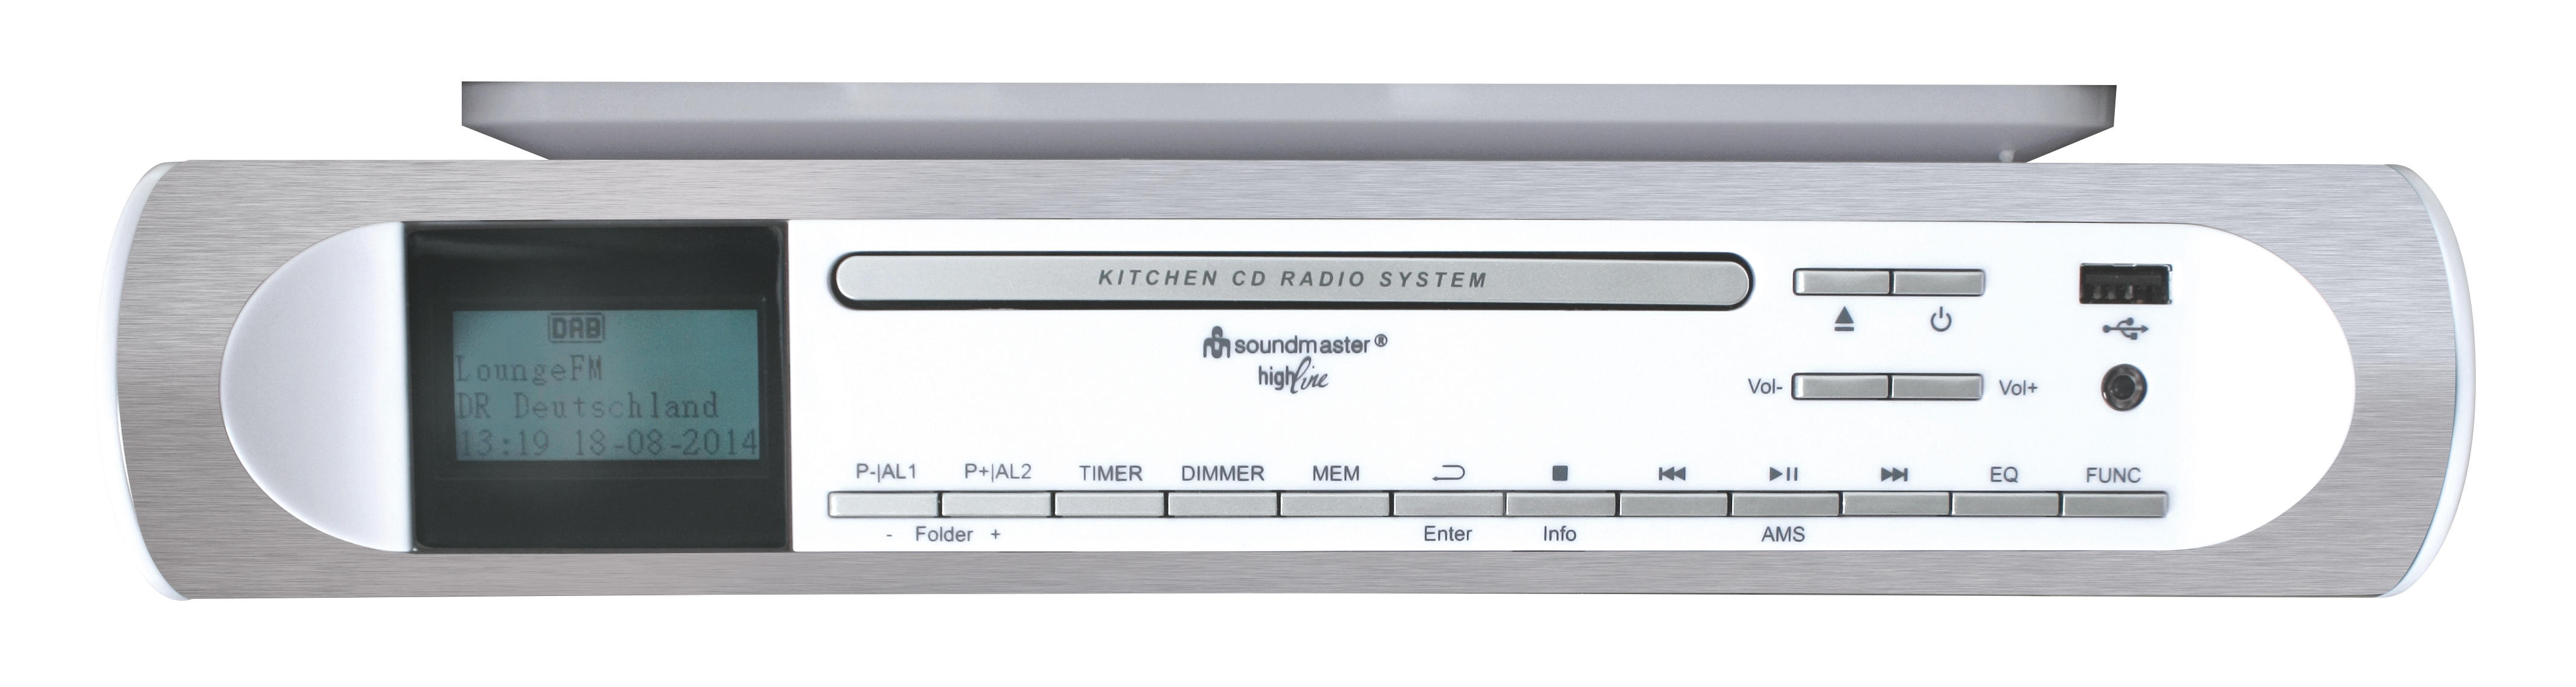 SOUNDMASTER UR2170 DAB+ Radio, Silber/Weiß DAB, Tuner, PLL